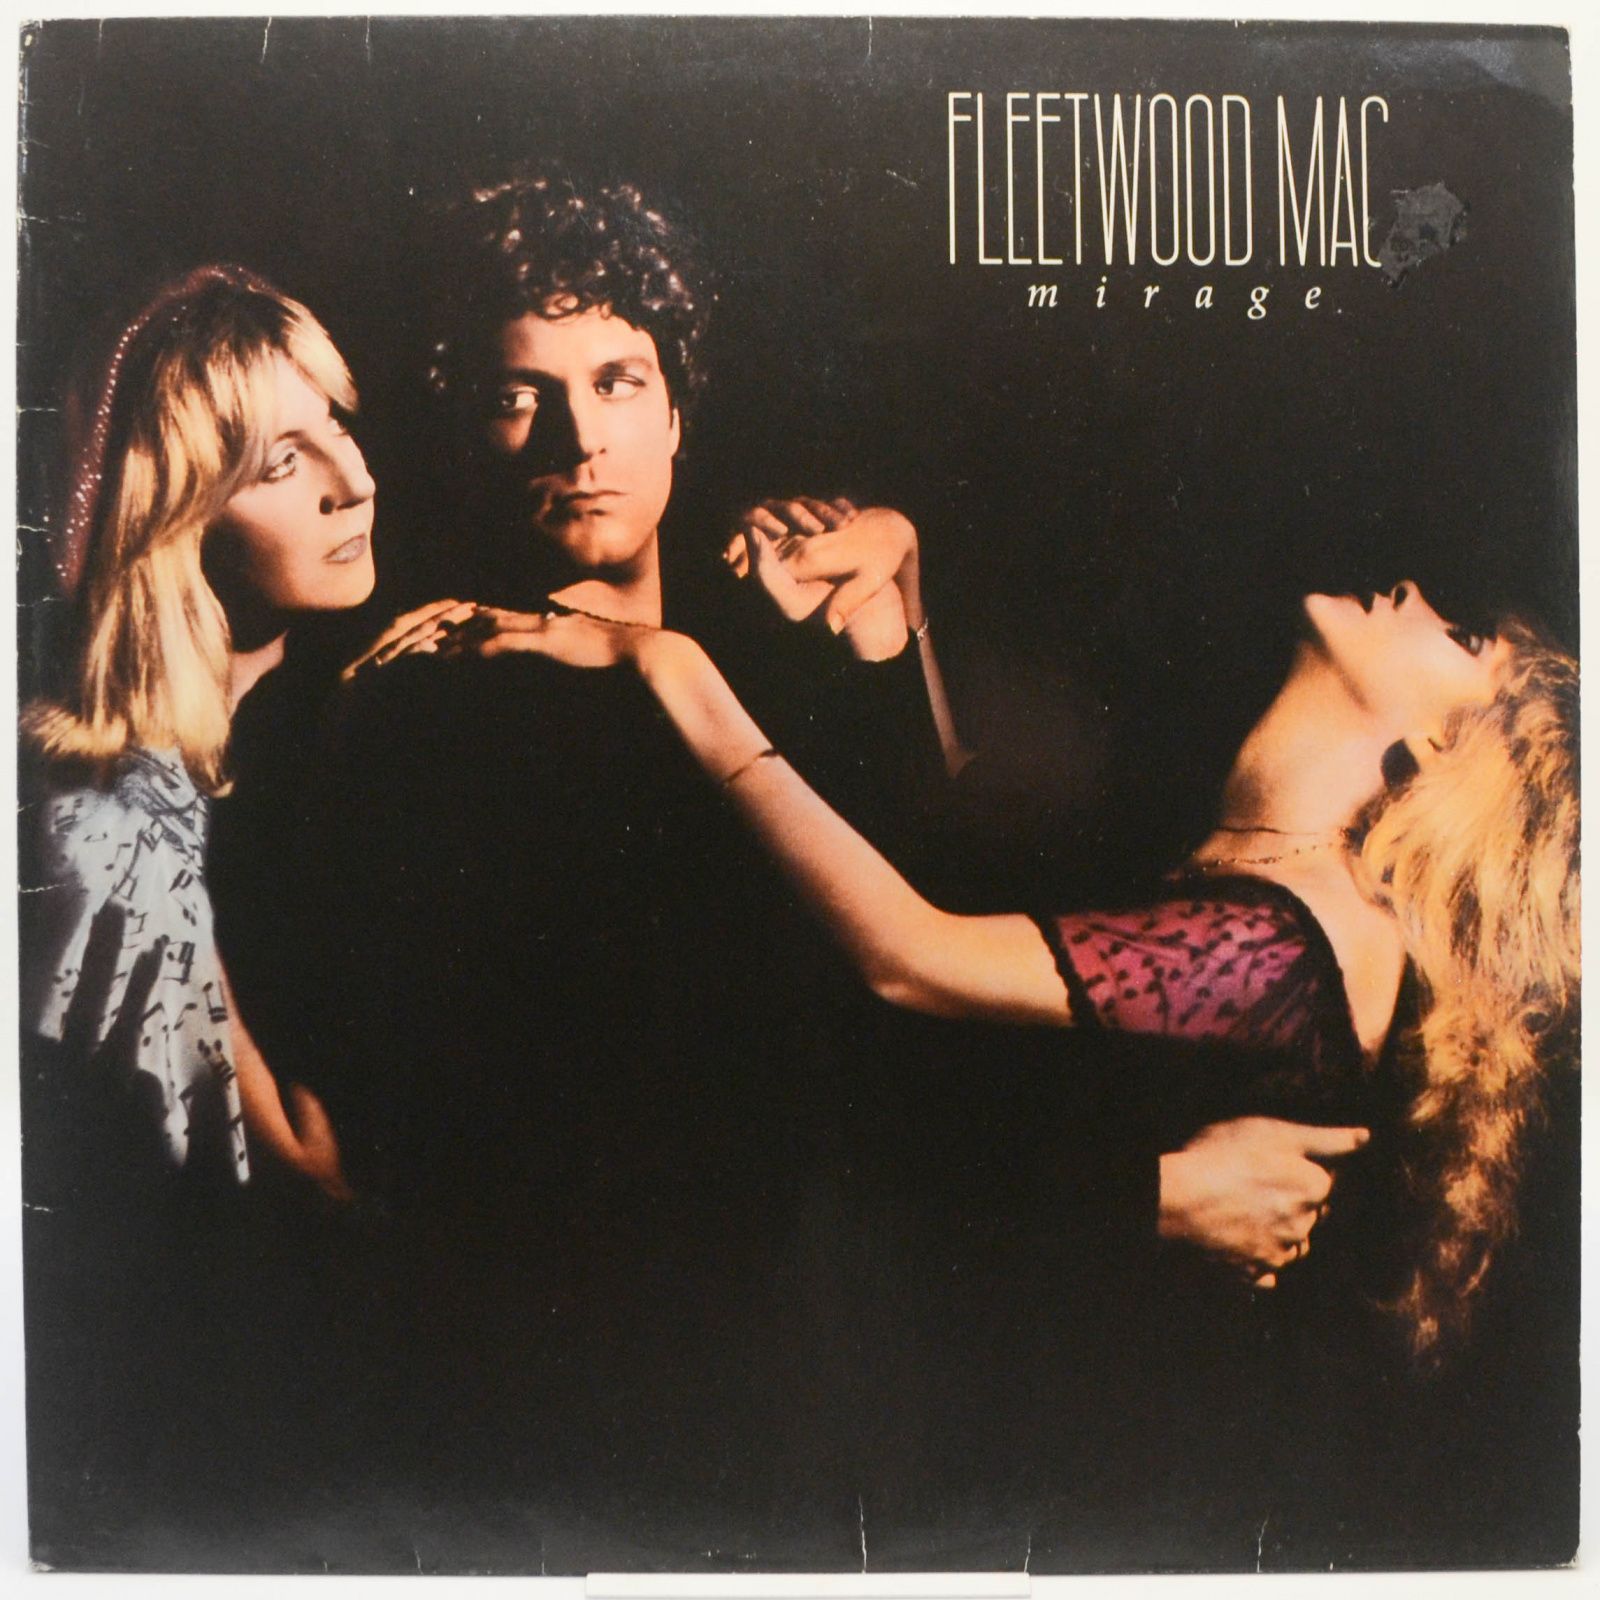 Fleetwood Mac — Mirage, 1982